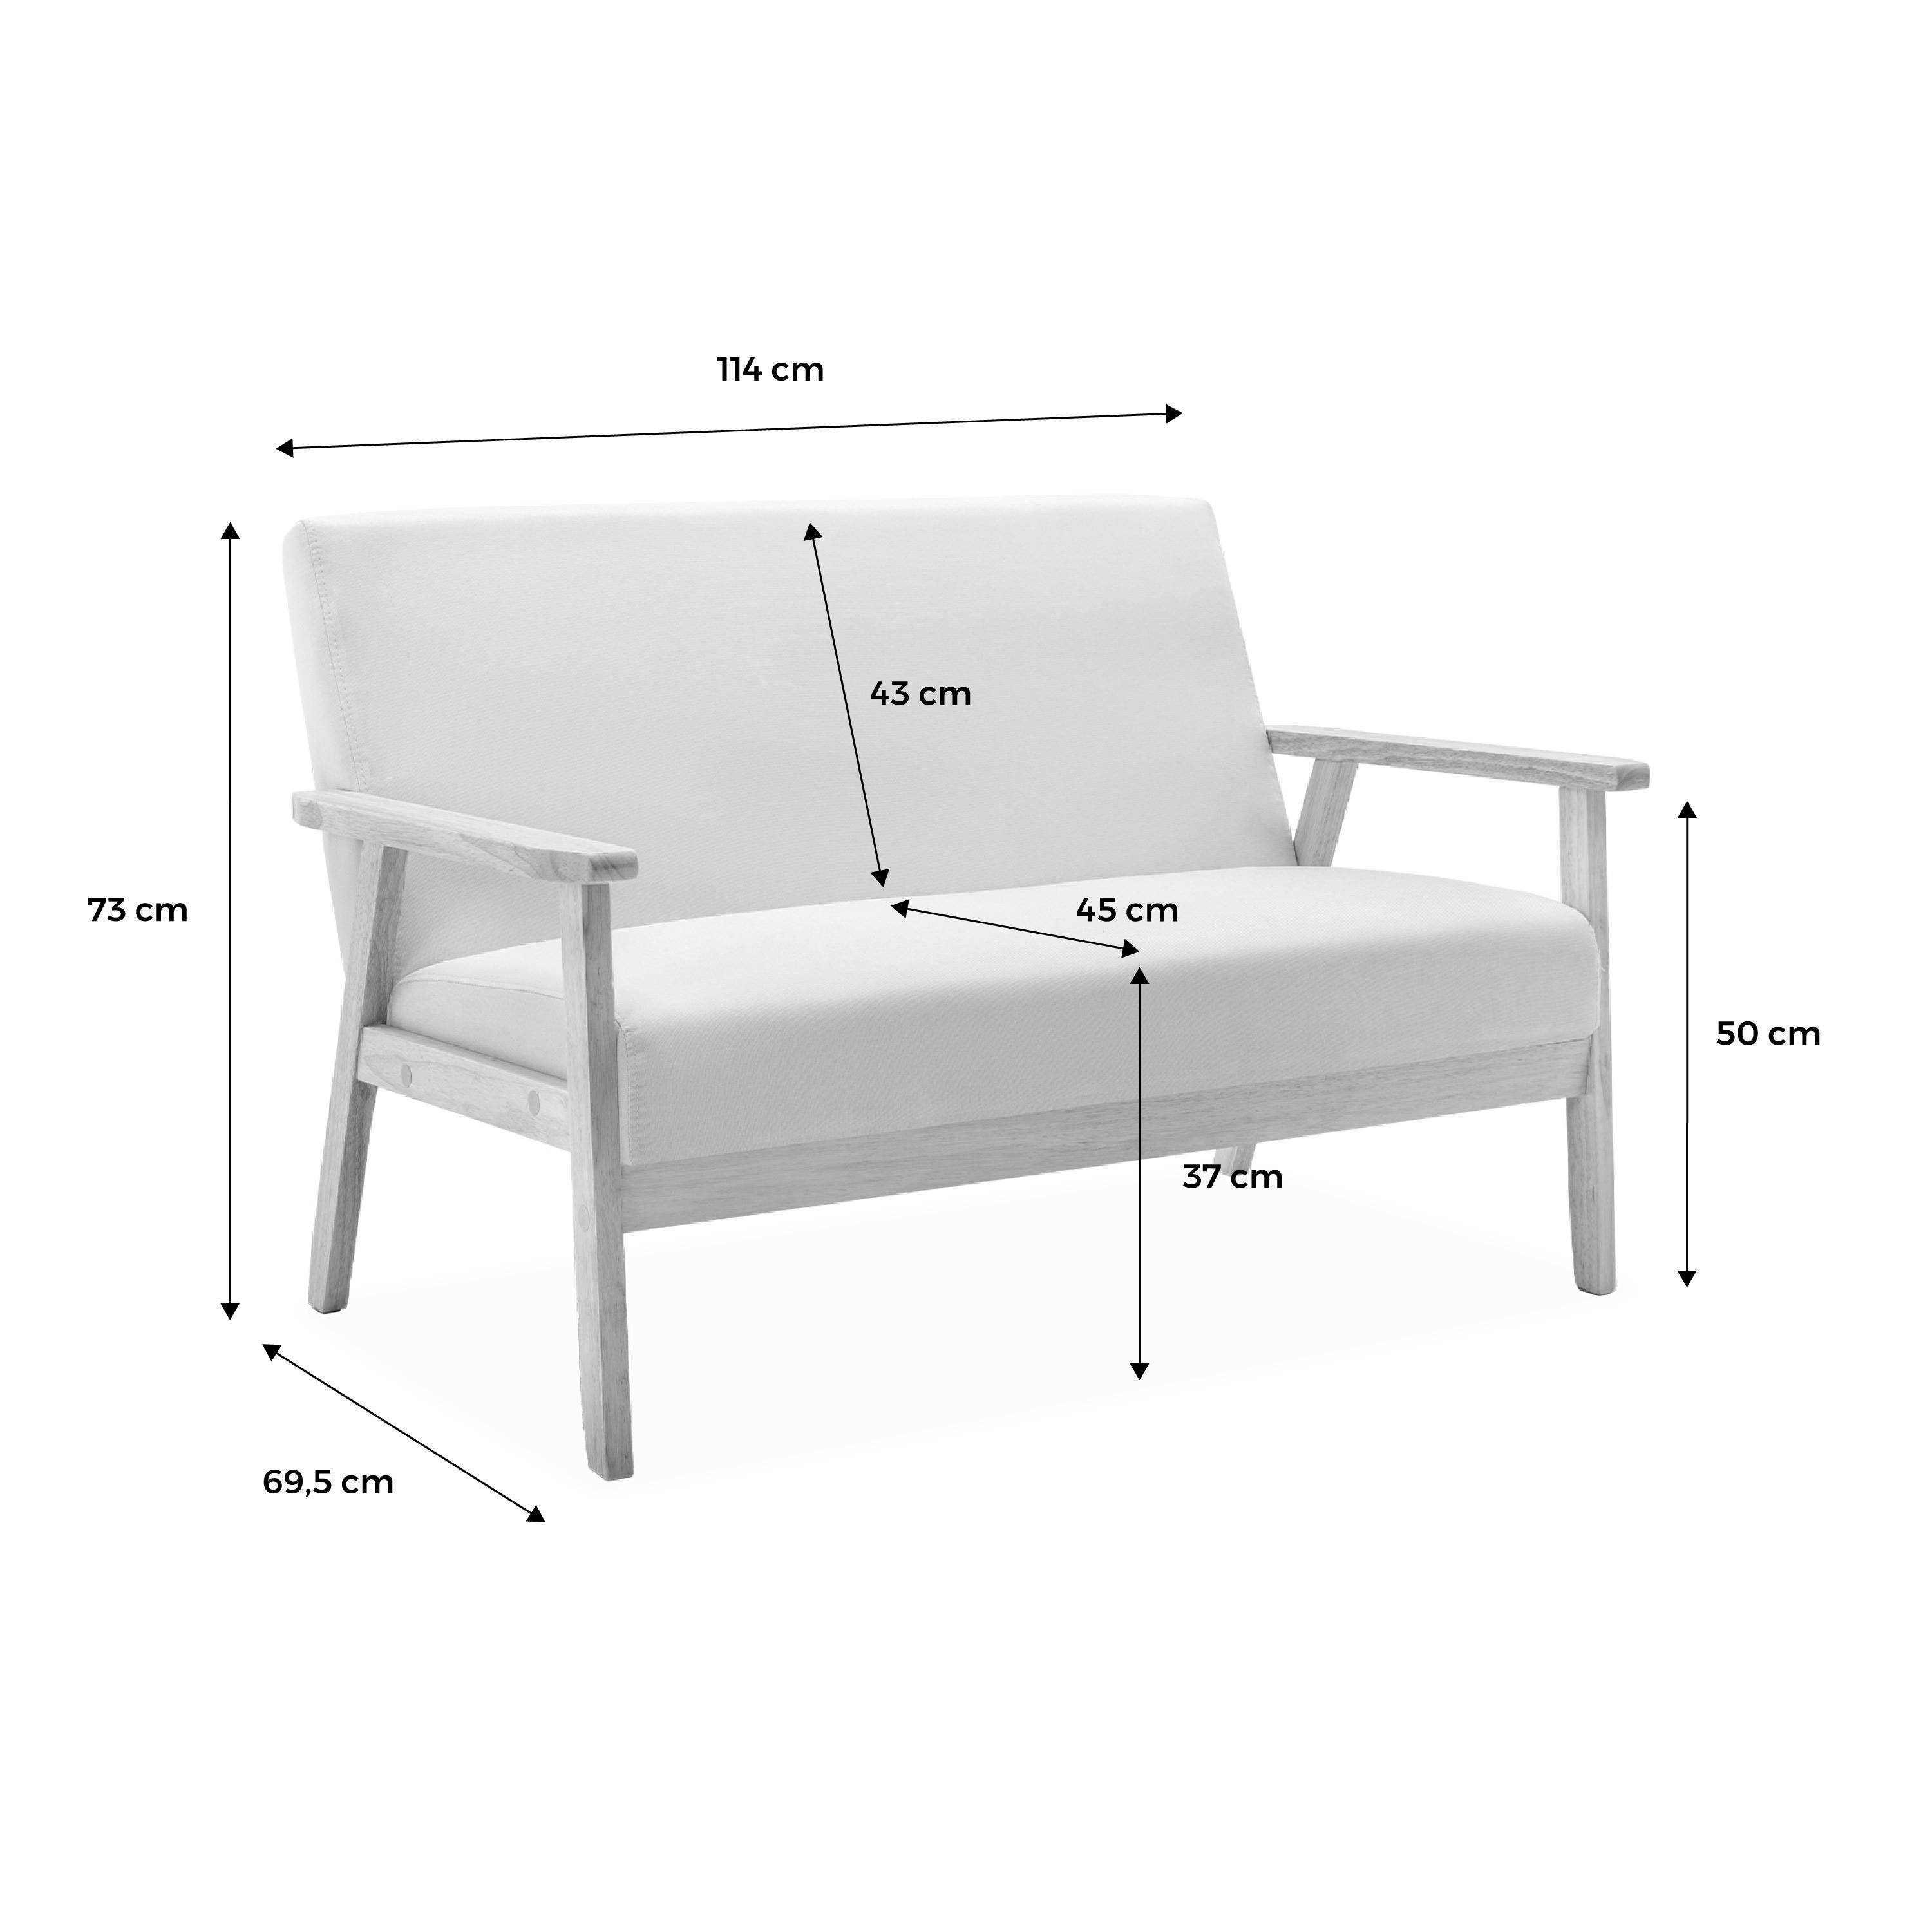 Banco y sillón de madera y tela gris claro, Isak, L 114 x A 69,5 x A 73 cm,sweeek,Photo9